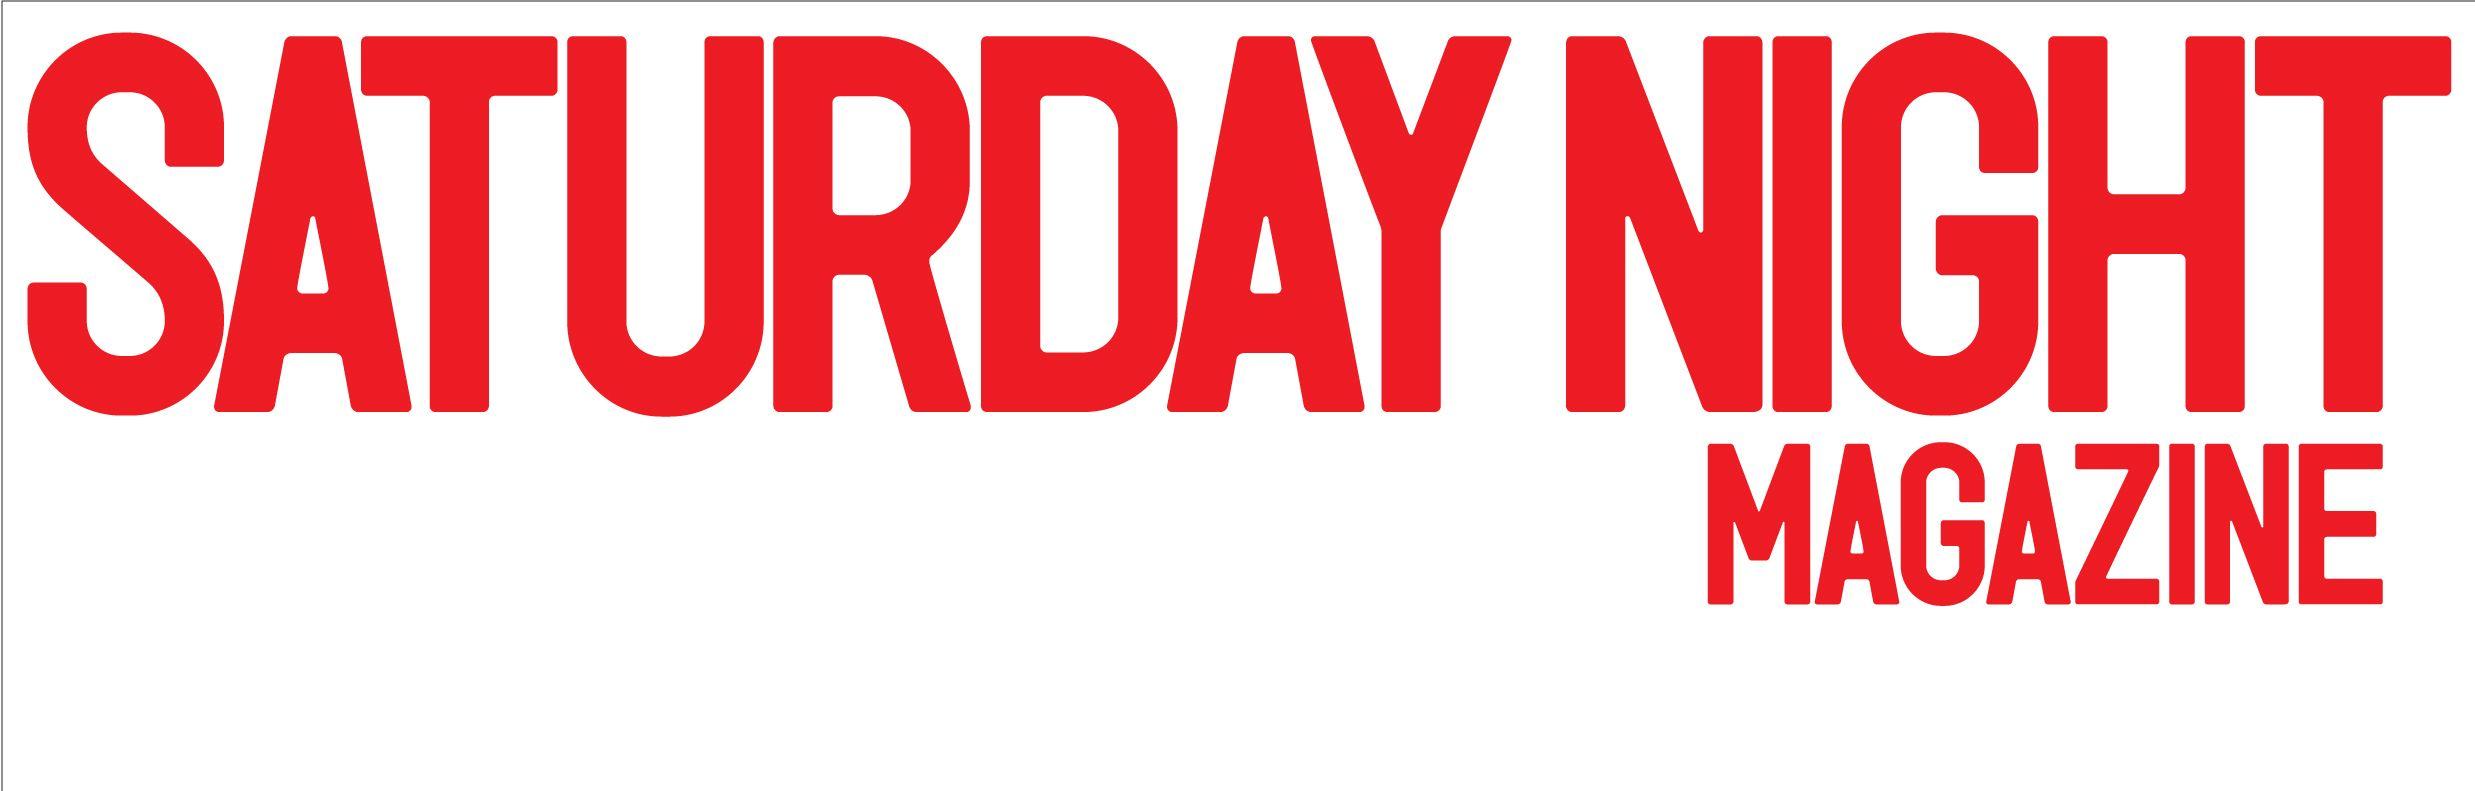 Saturday Logo - File:Saturday Night Magazine (logo).jpg - Wikimedia Commons